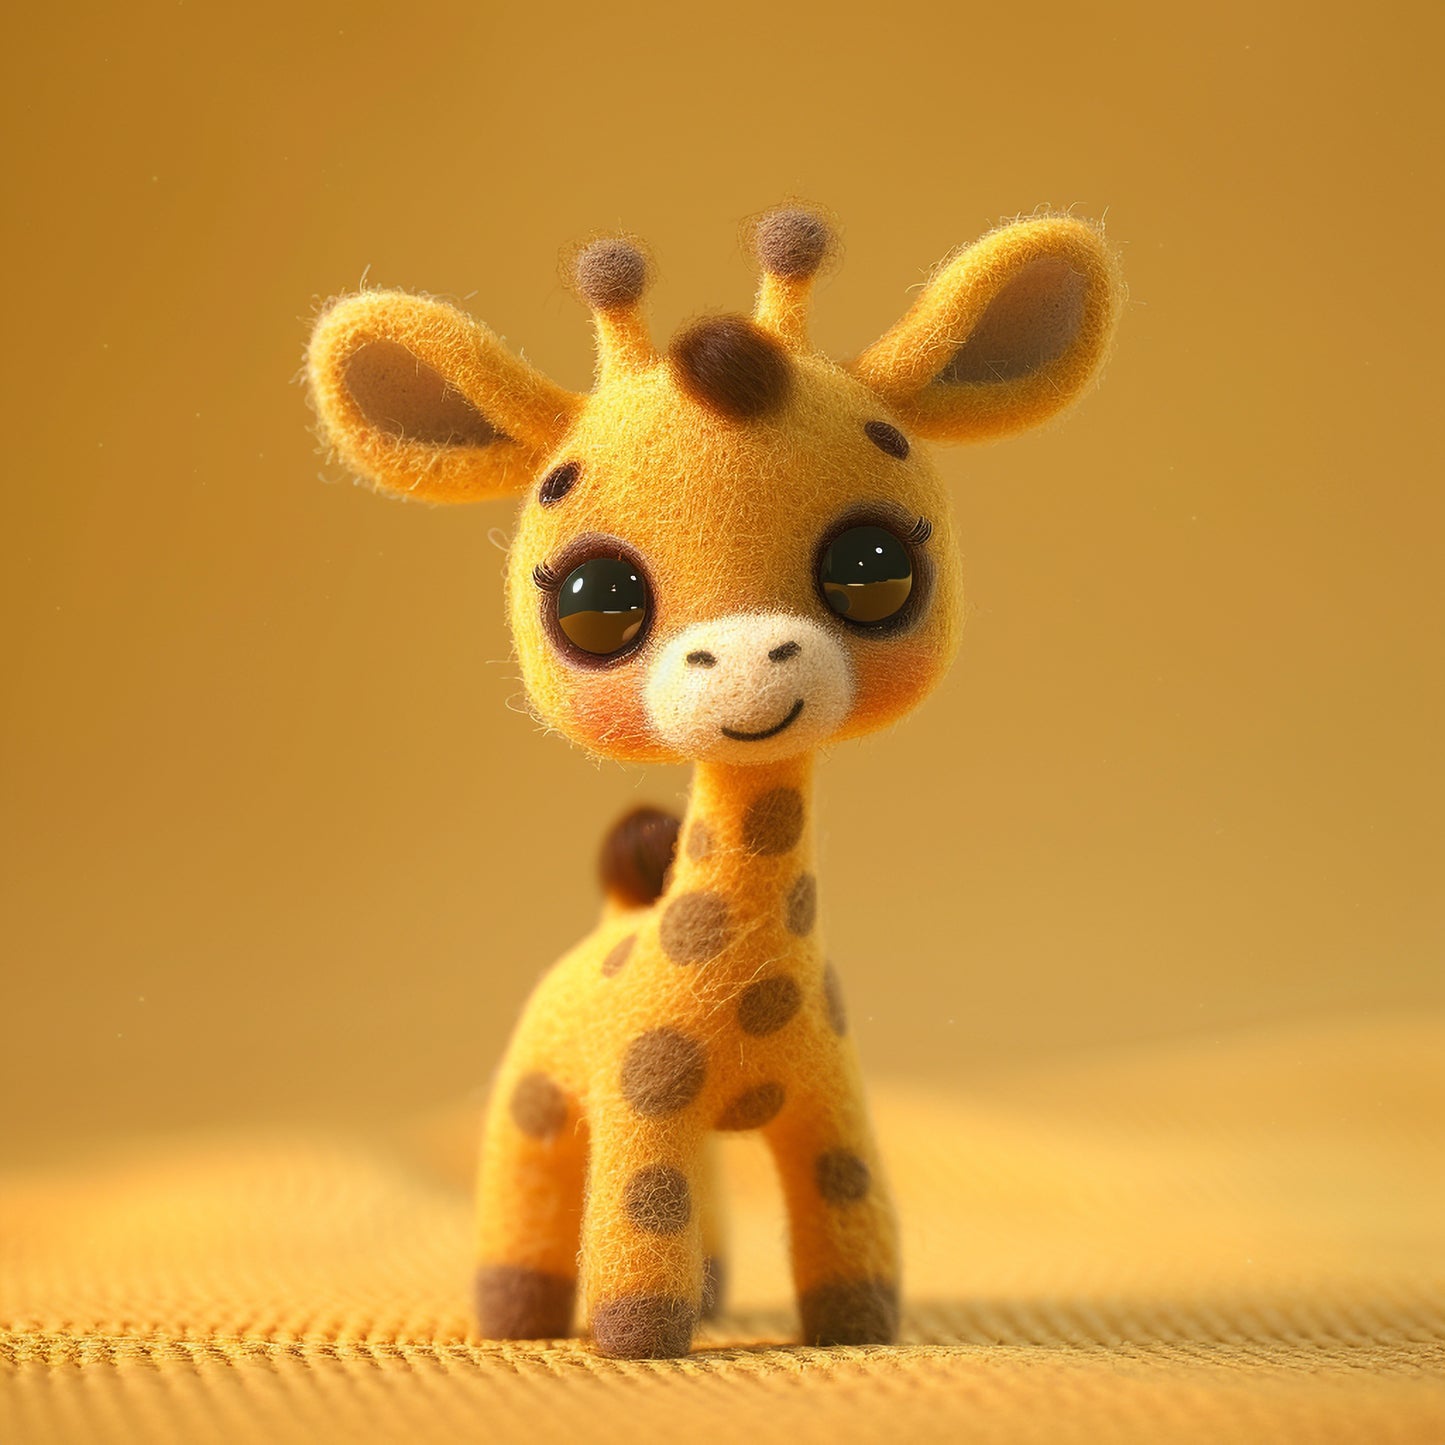 Adorable Handmade Baby Giraffe Toy on Yellow Background